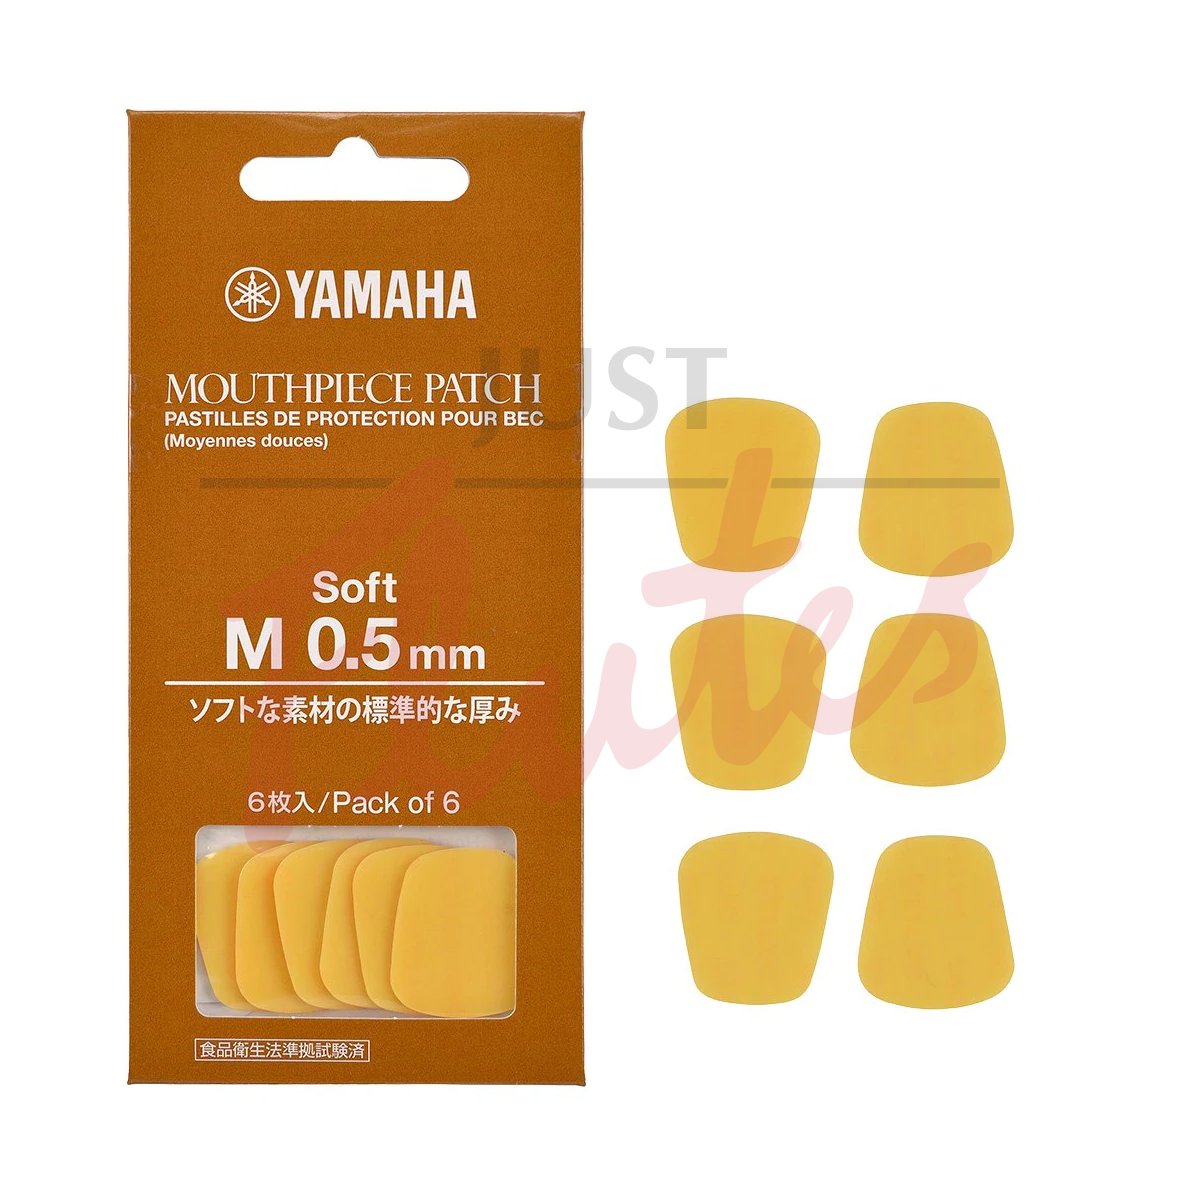 Yamaha Mouthpiece Patches, Soft Type, 0.5mm, Medium, 6-pack